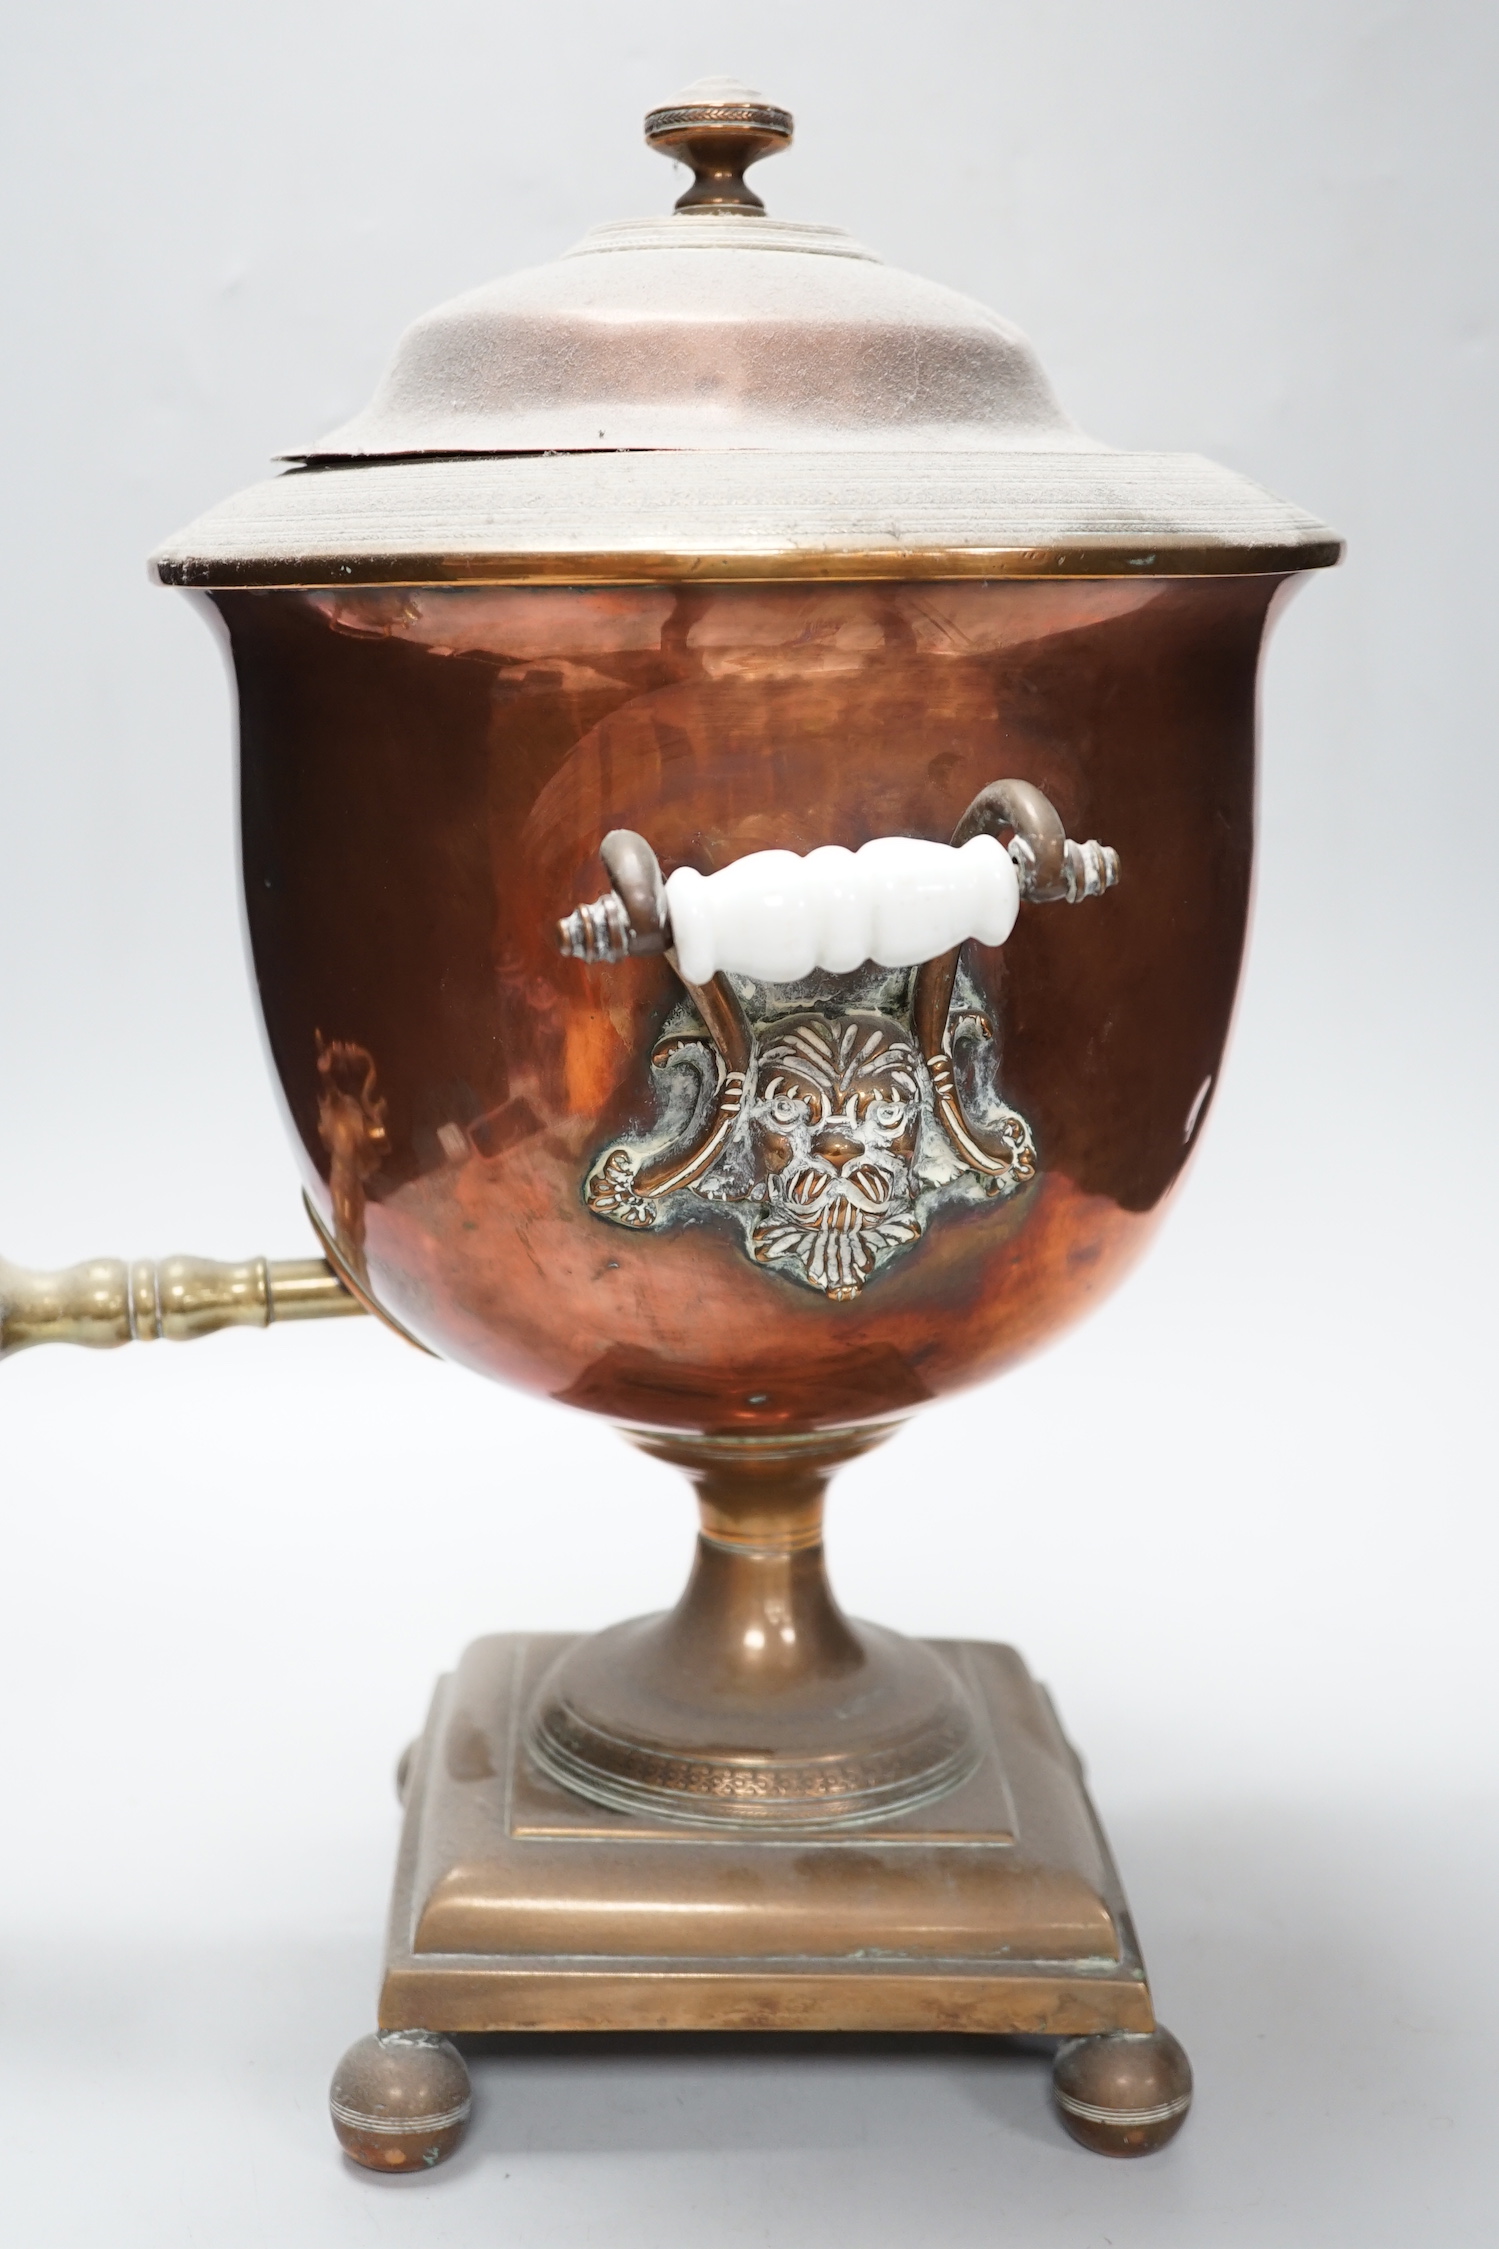 A copper tea urn with brass spigot tap and handles, 44cm